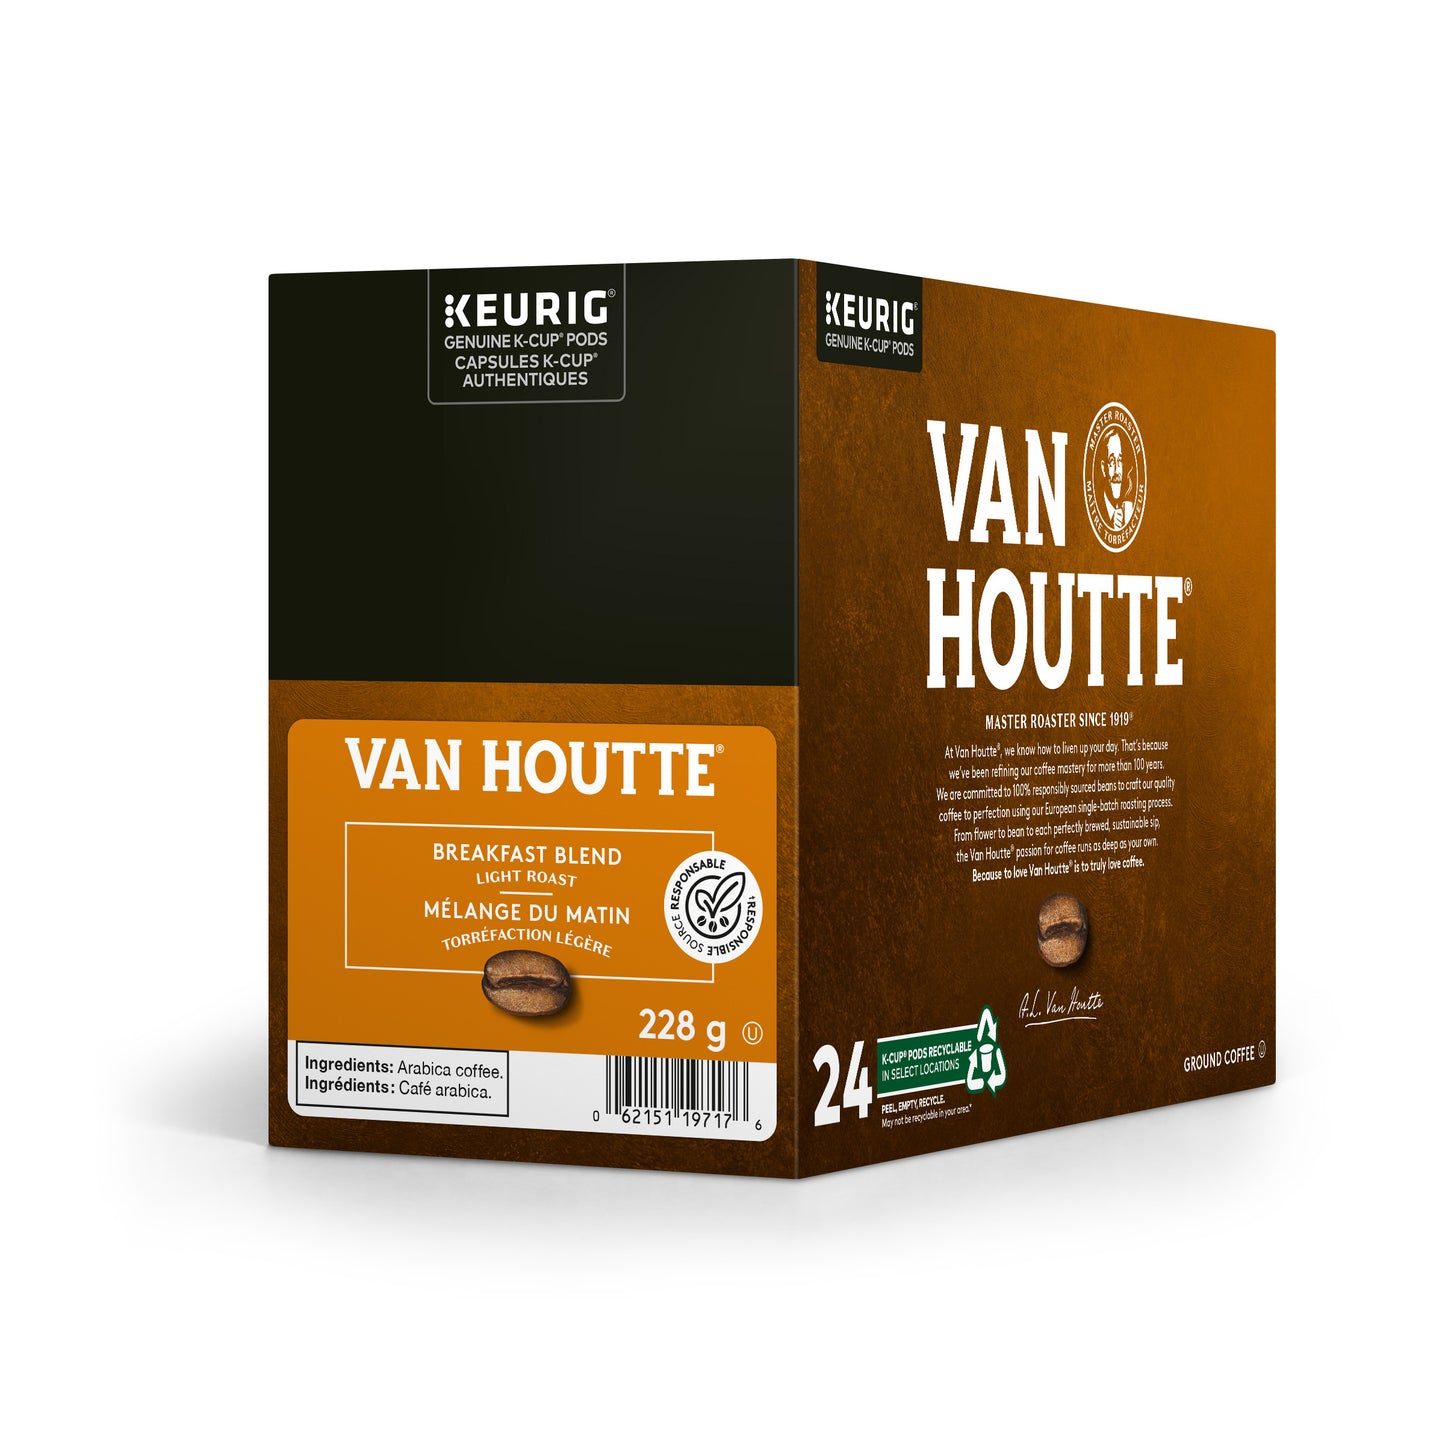 Van Houtte® Vanilla Hazelnut Decaf Coffee [24 pack]